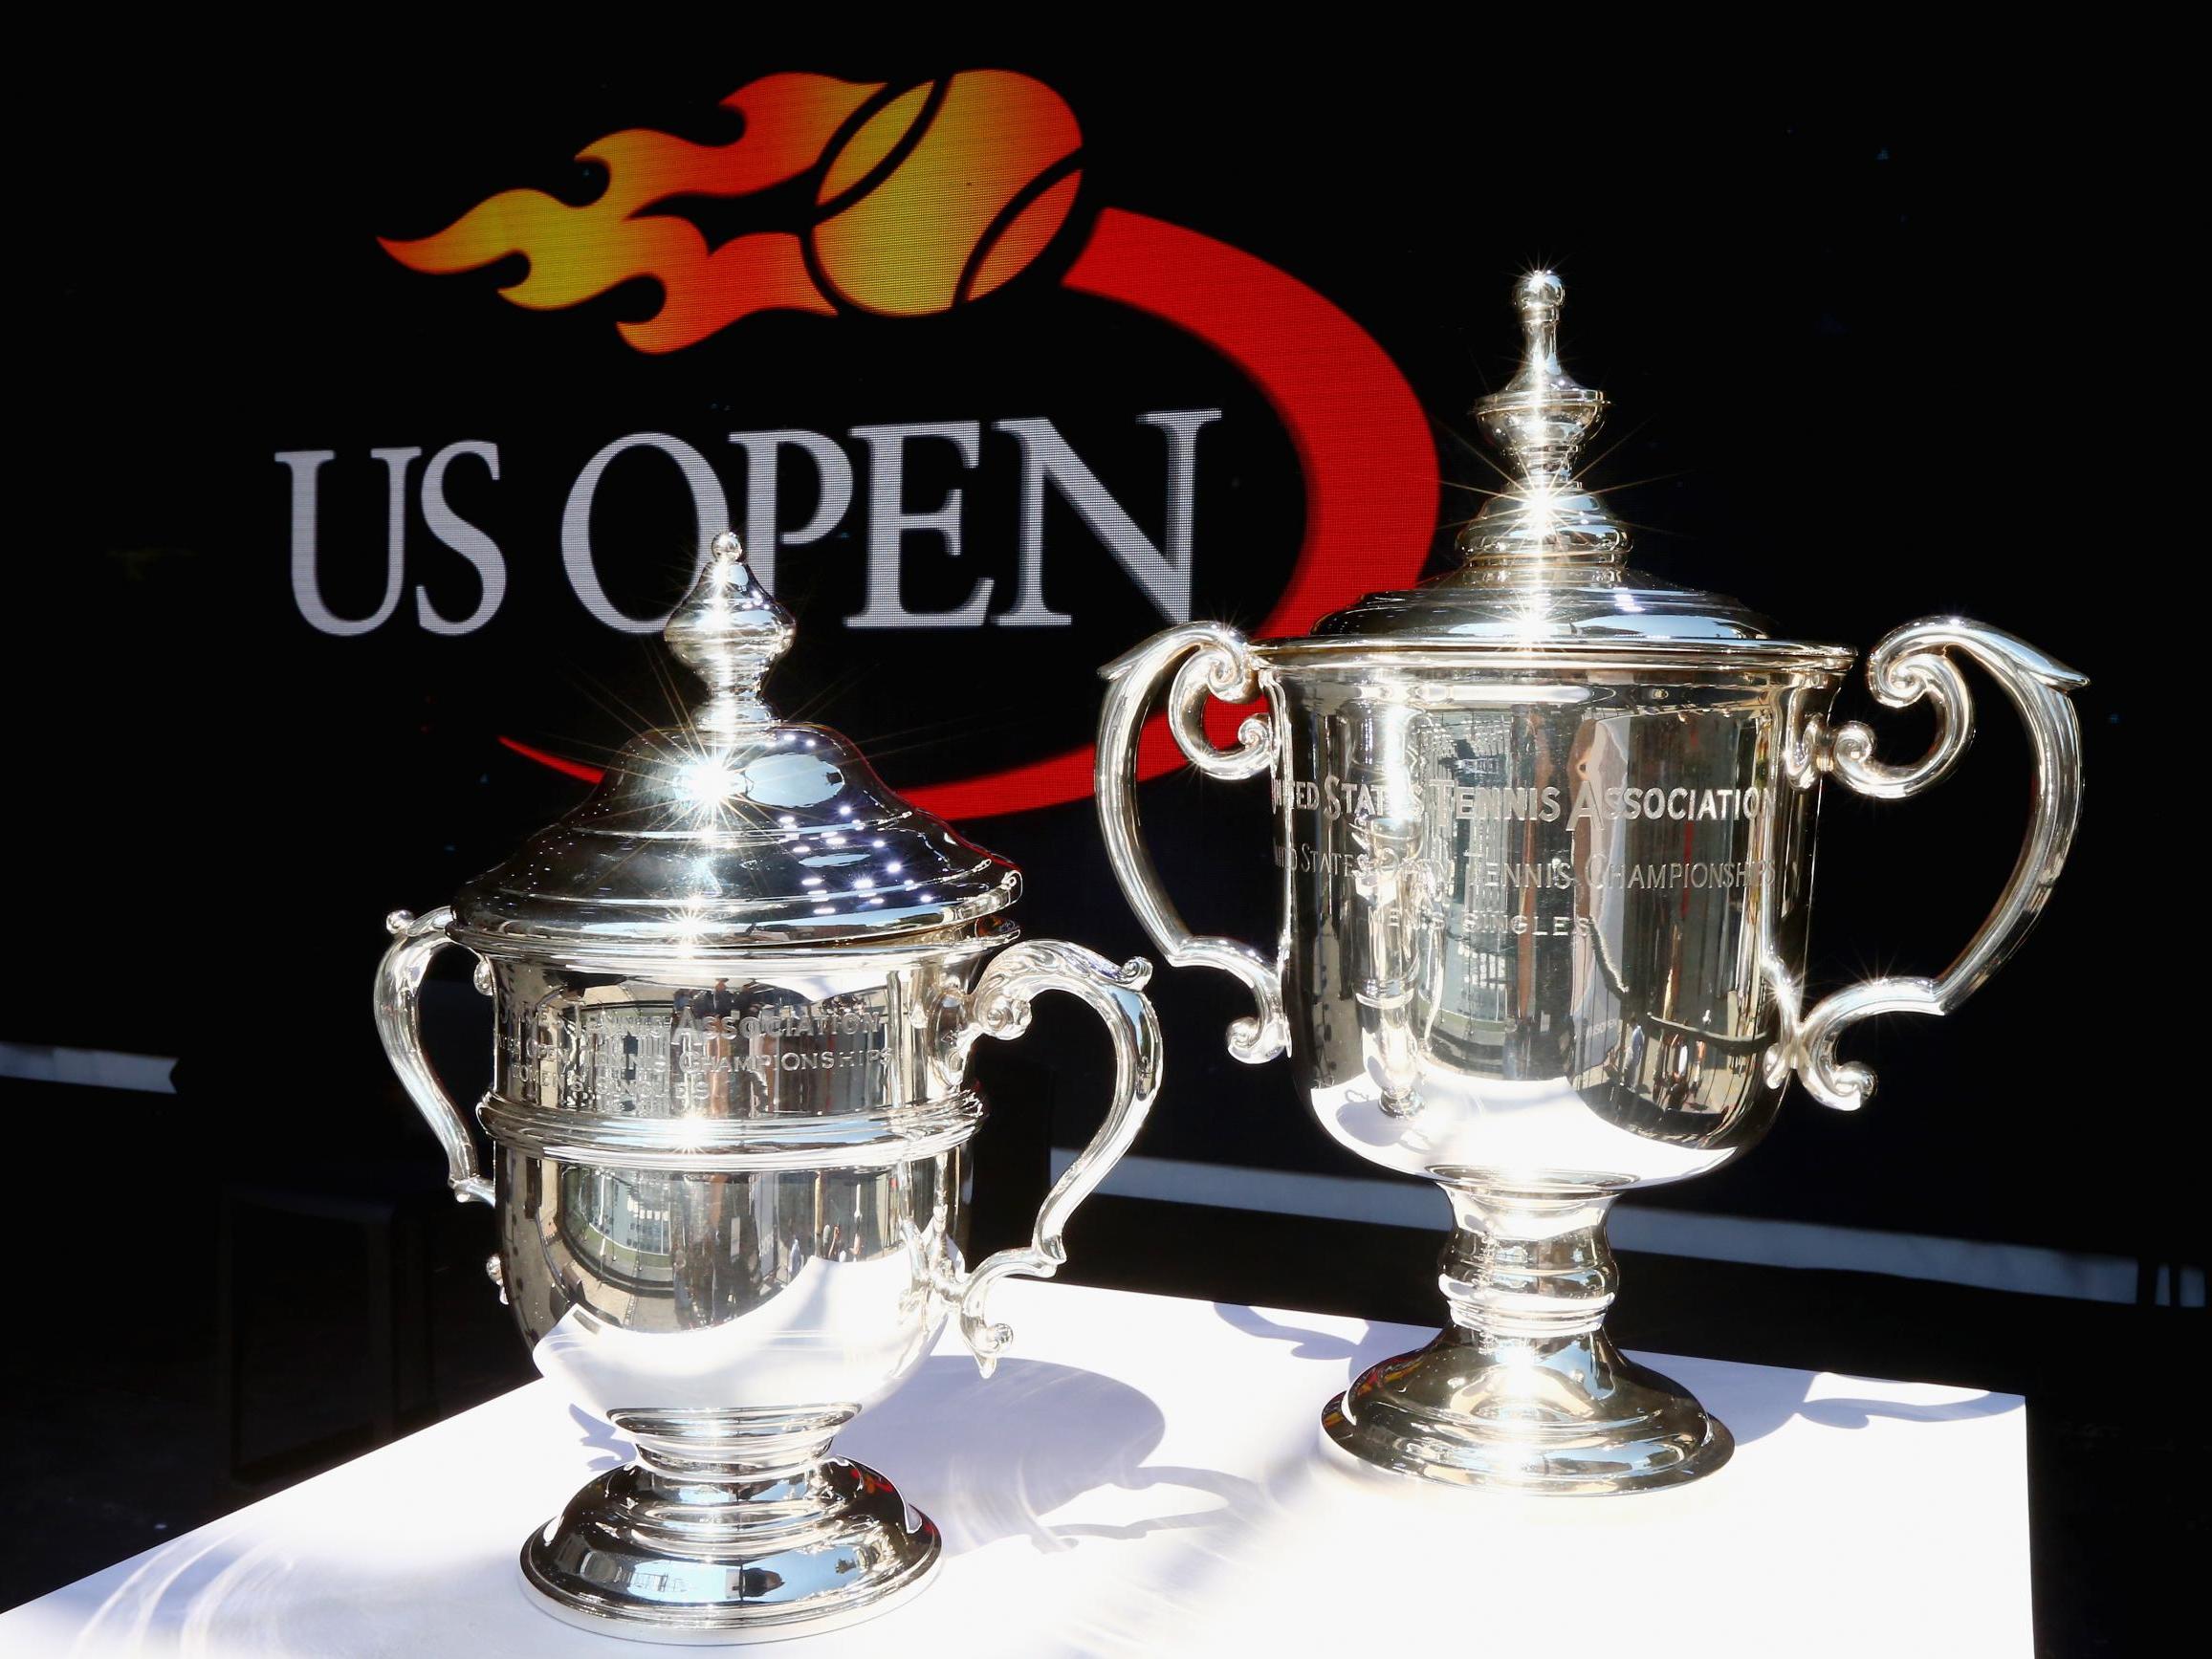 The women’s and men’s US Open trophies